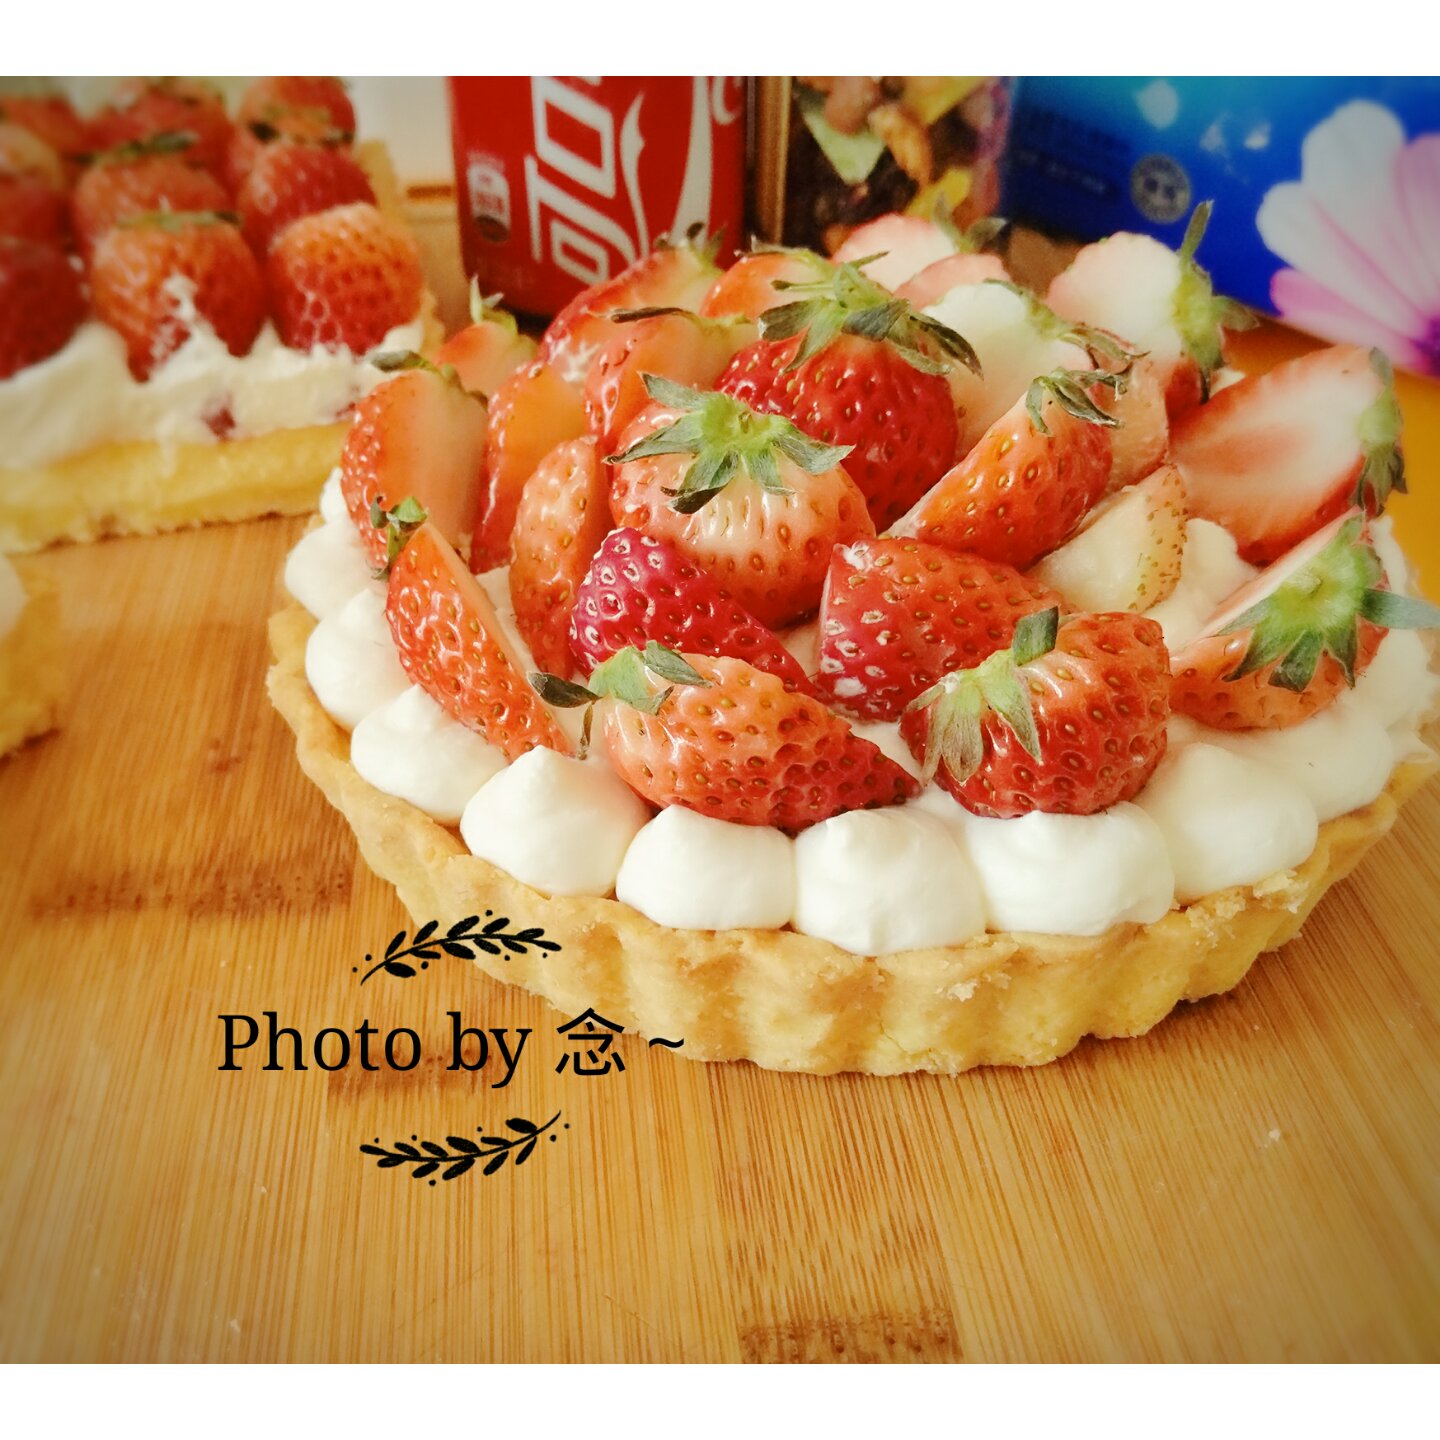 草莓挞 Strawberry Tart